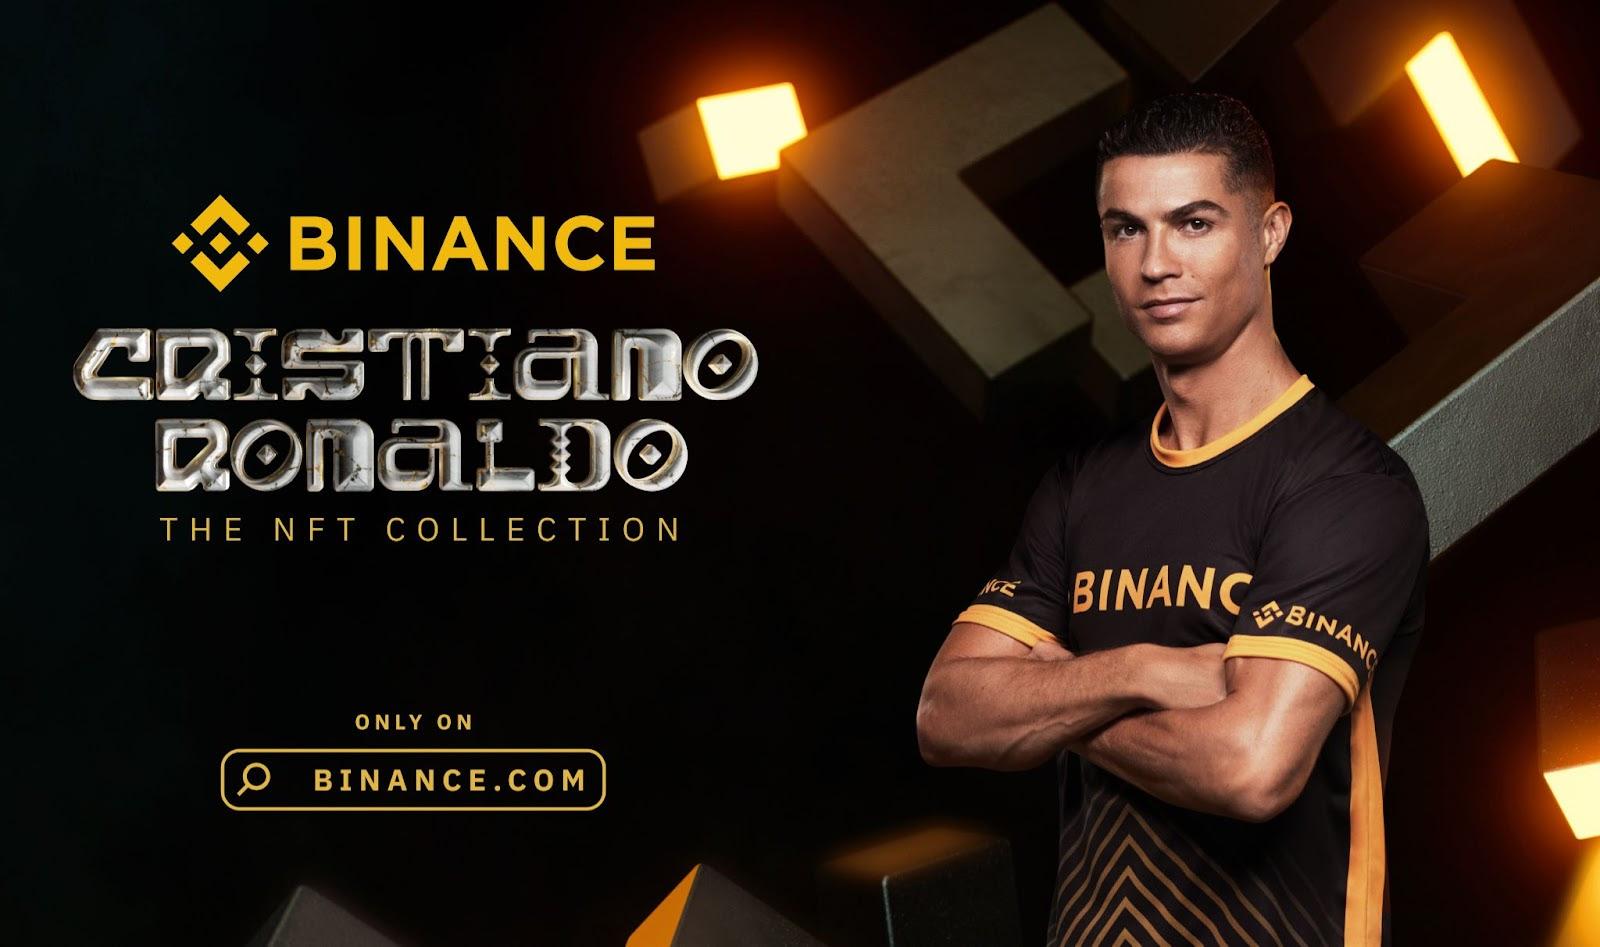 Cristiano Ronaldo - Binance